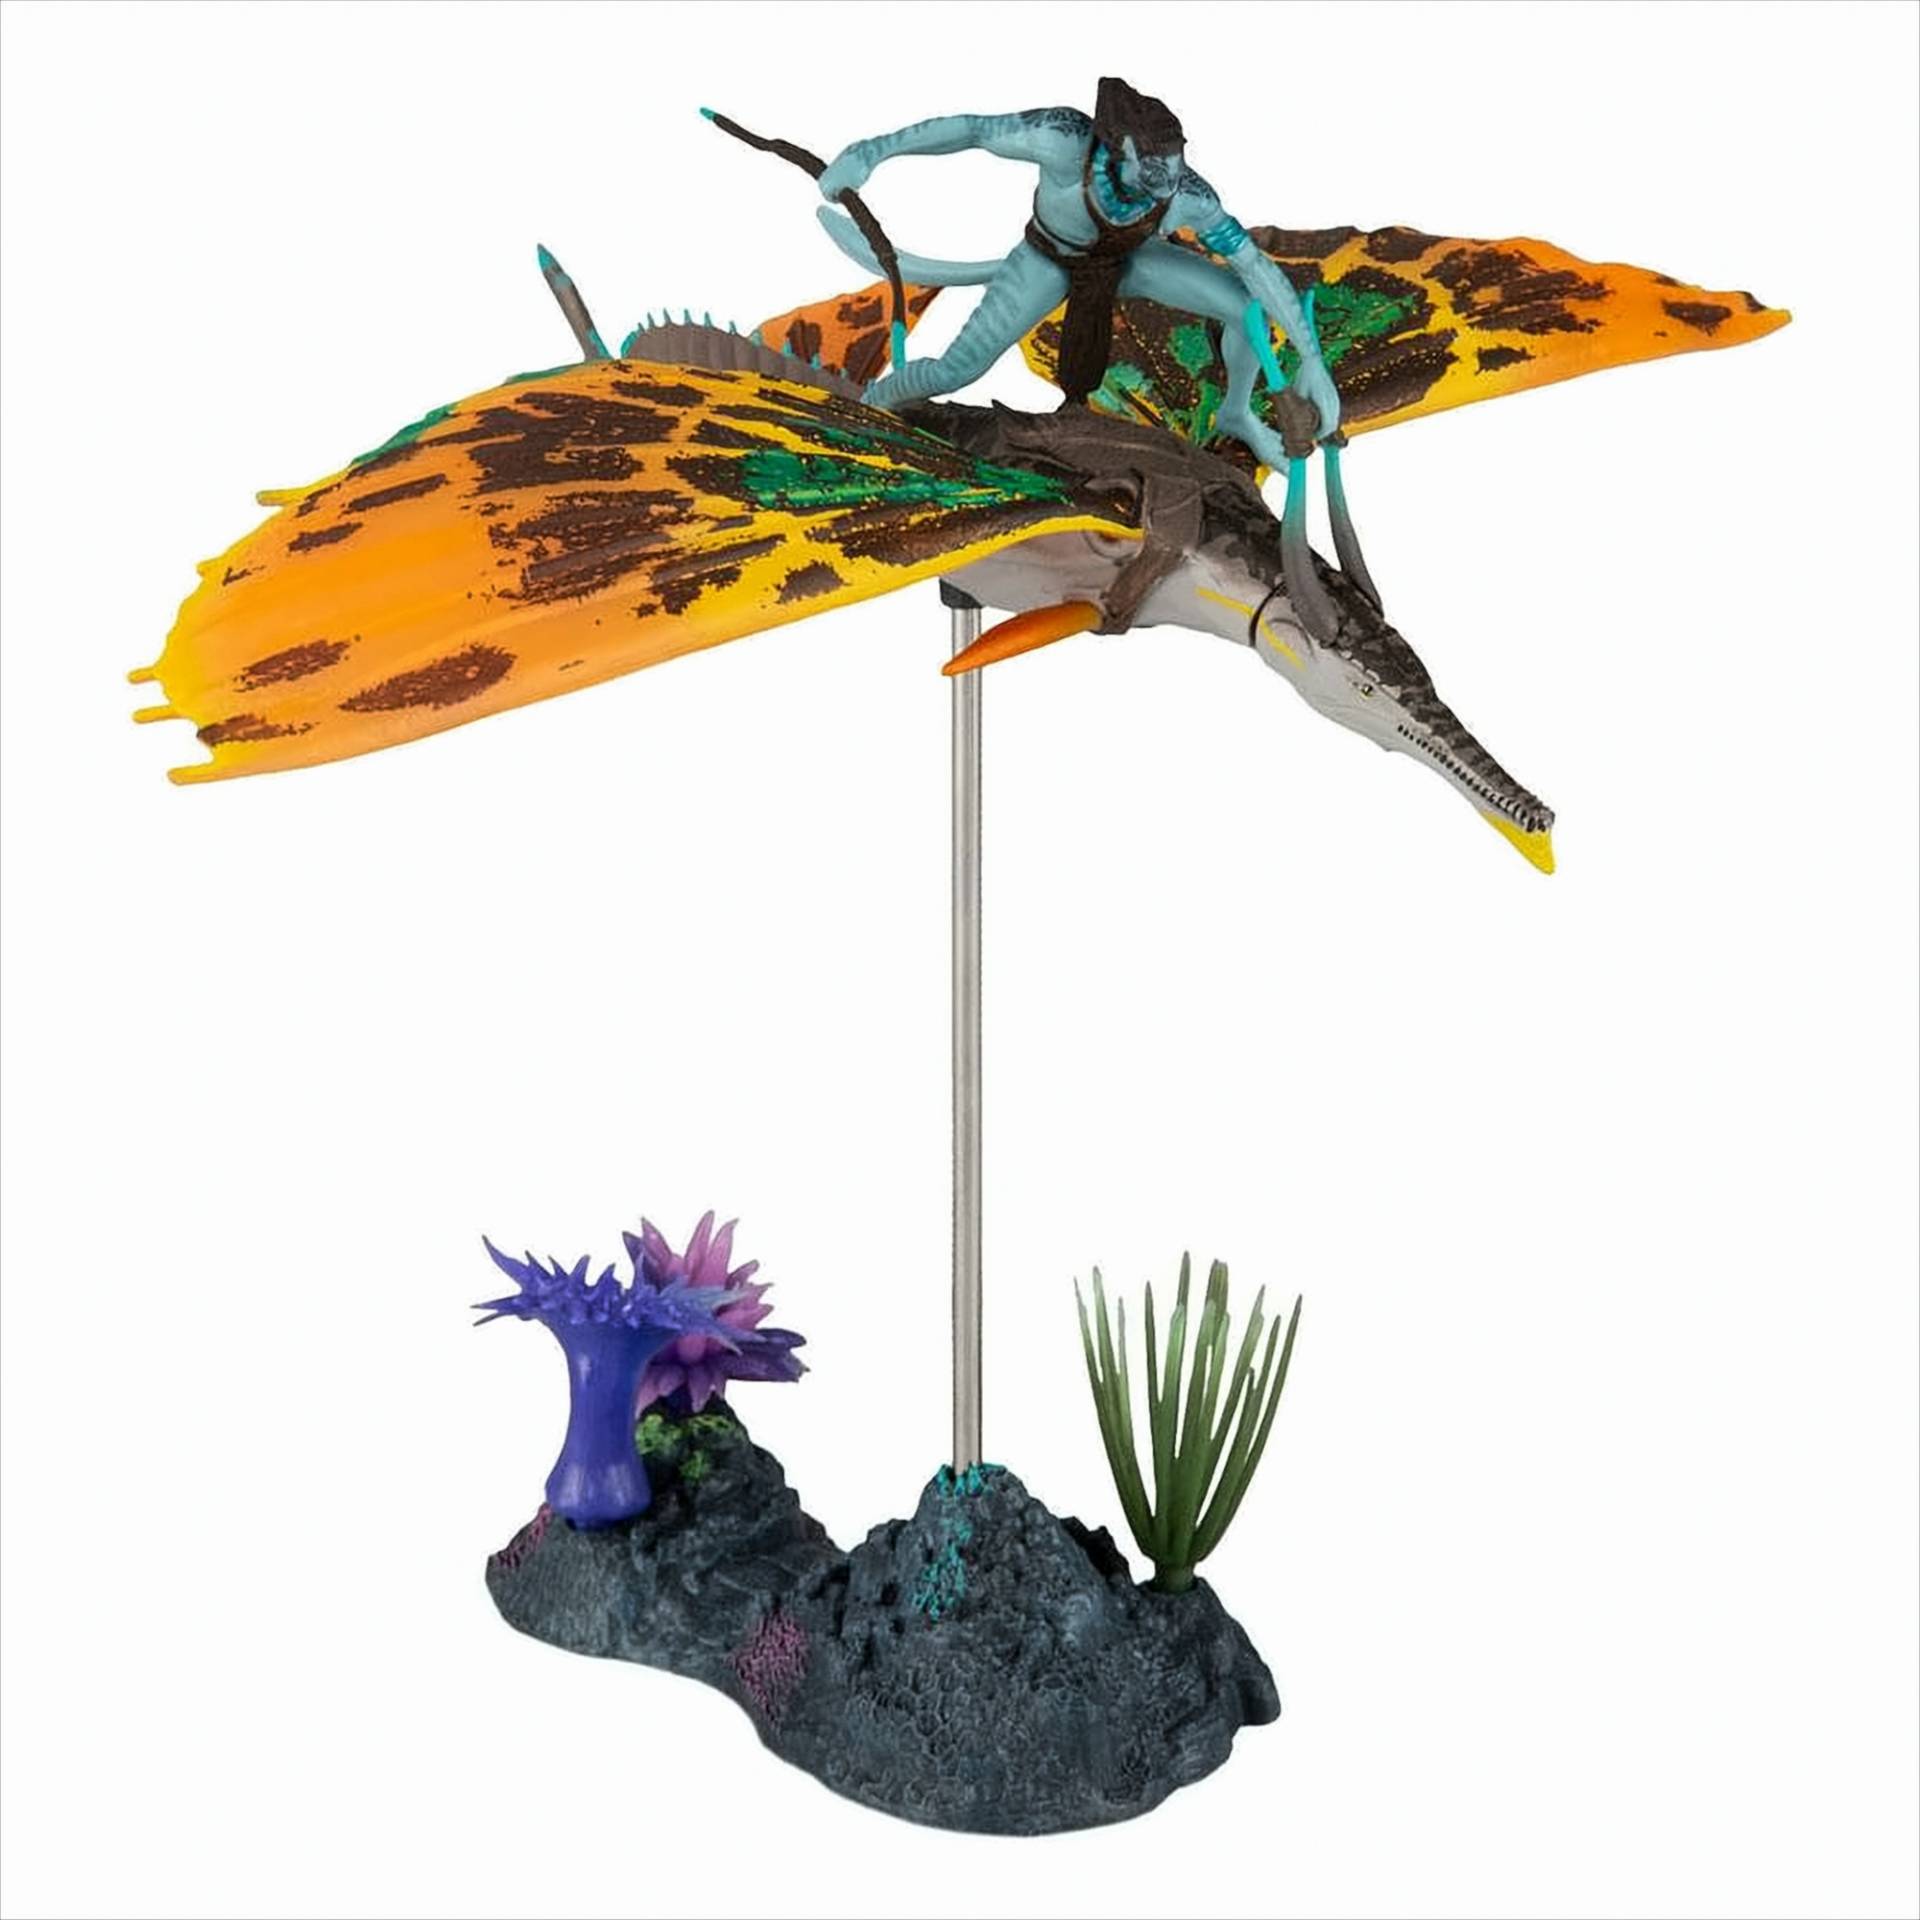 Avatar The Way of Water - Tonowari & Skimwing von McFarlane Toys